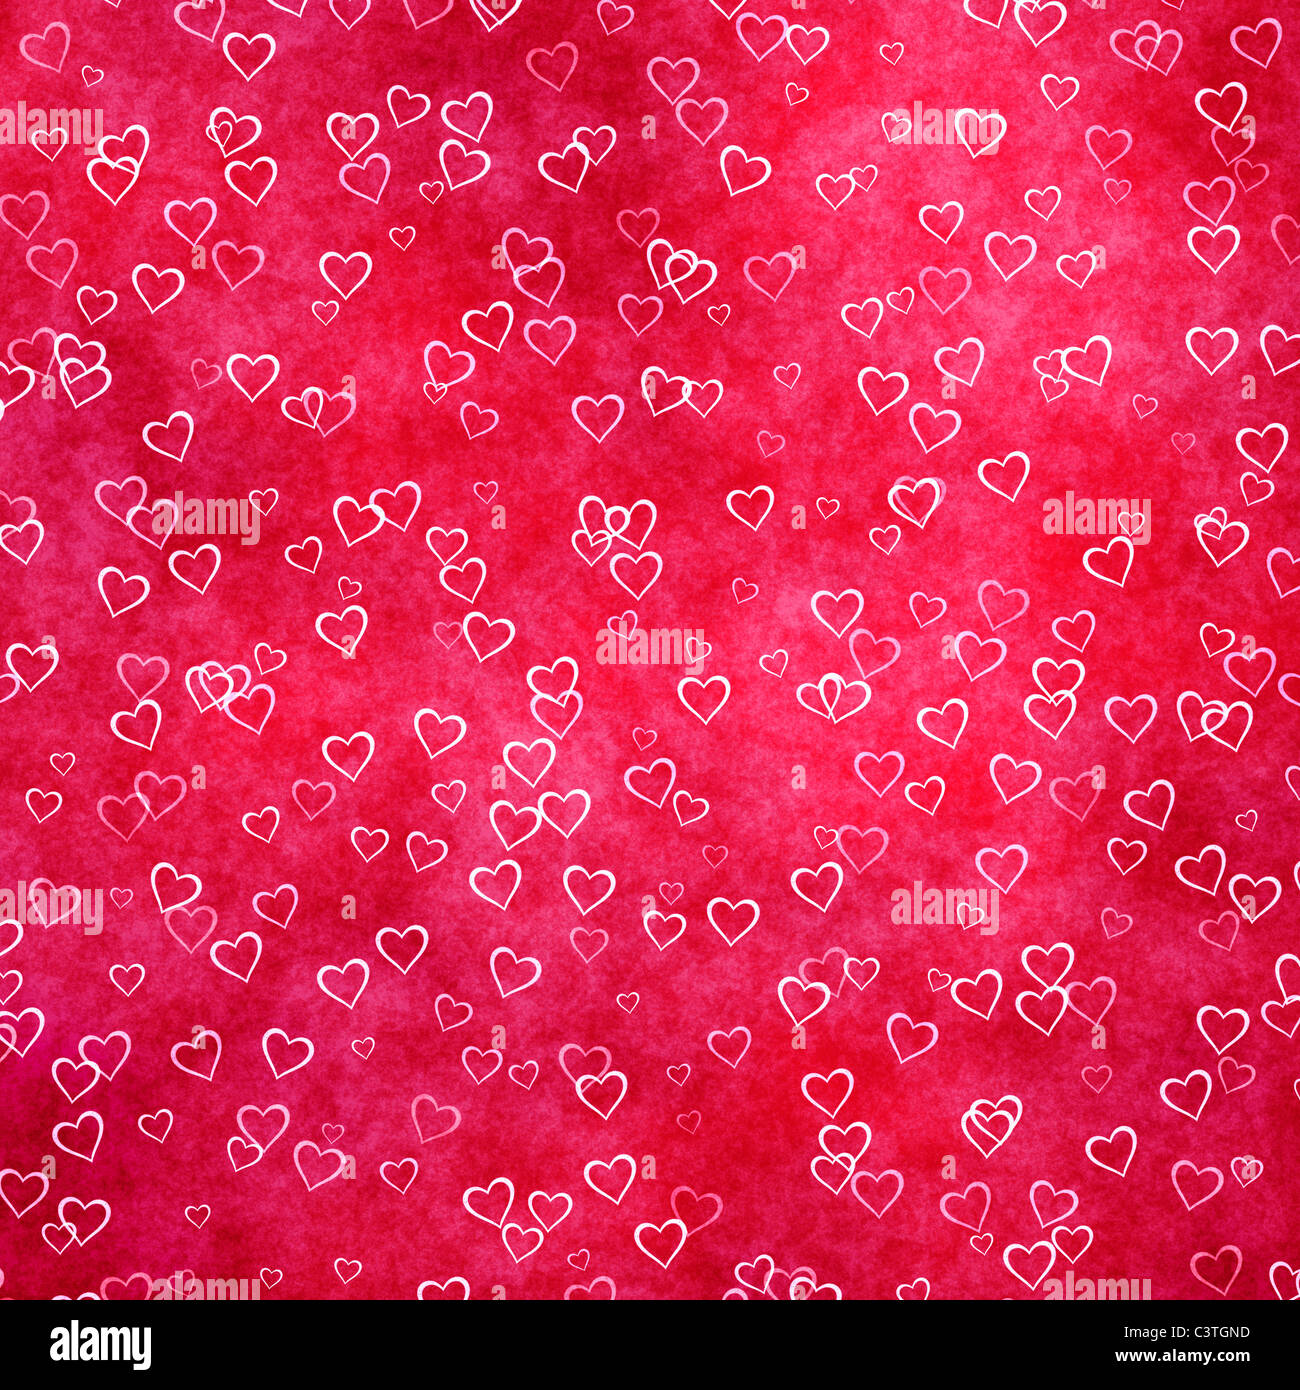 great illustration of love heart symbols background Stock Photo - Alamy